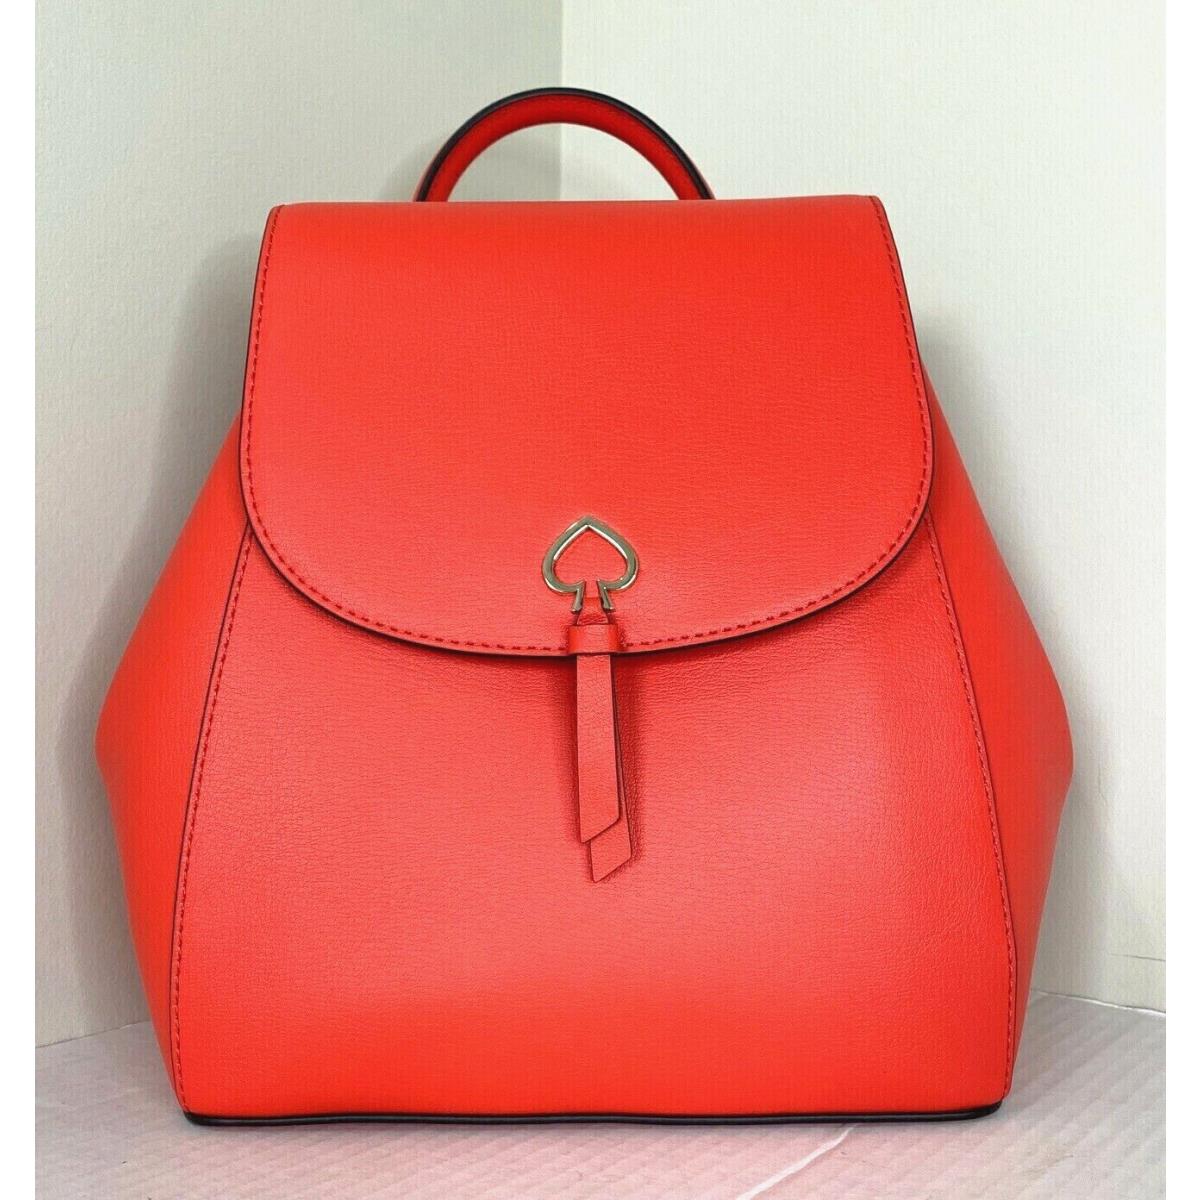 New Kate Spade Adel Medium Flap Backpack Leather Geranium Orange Red